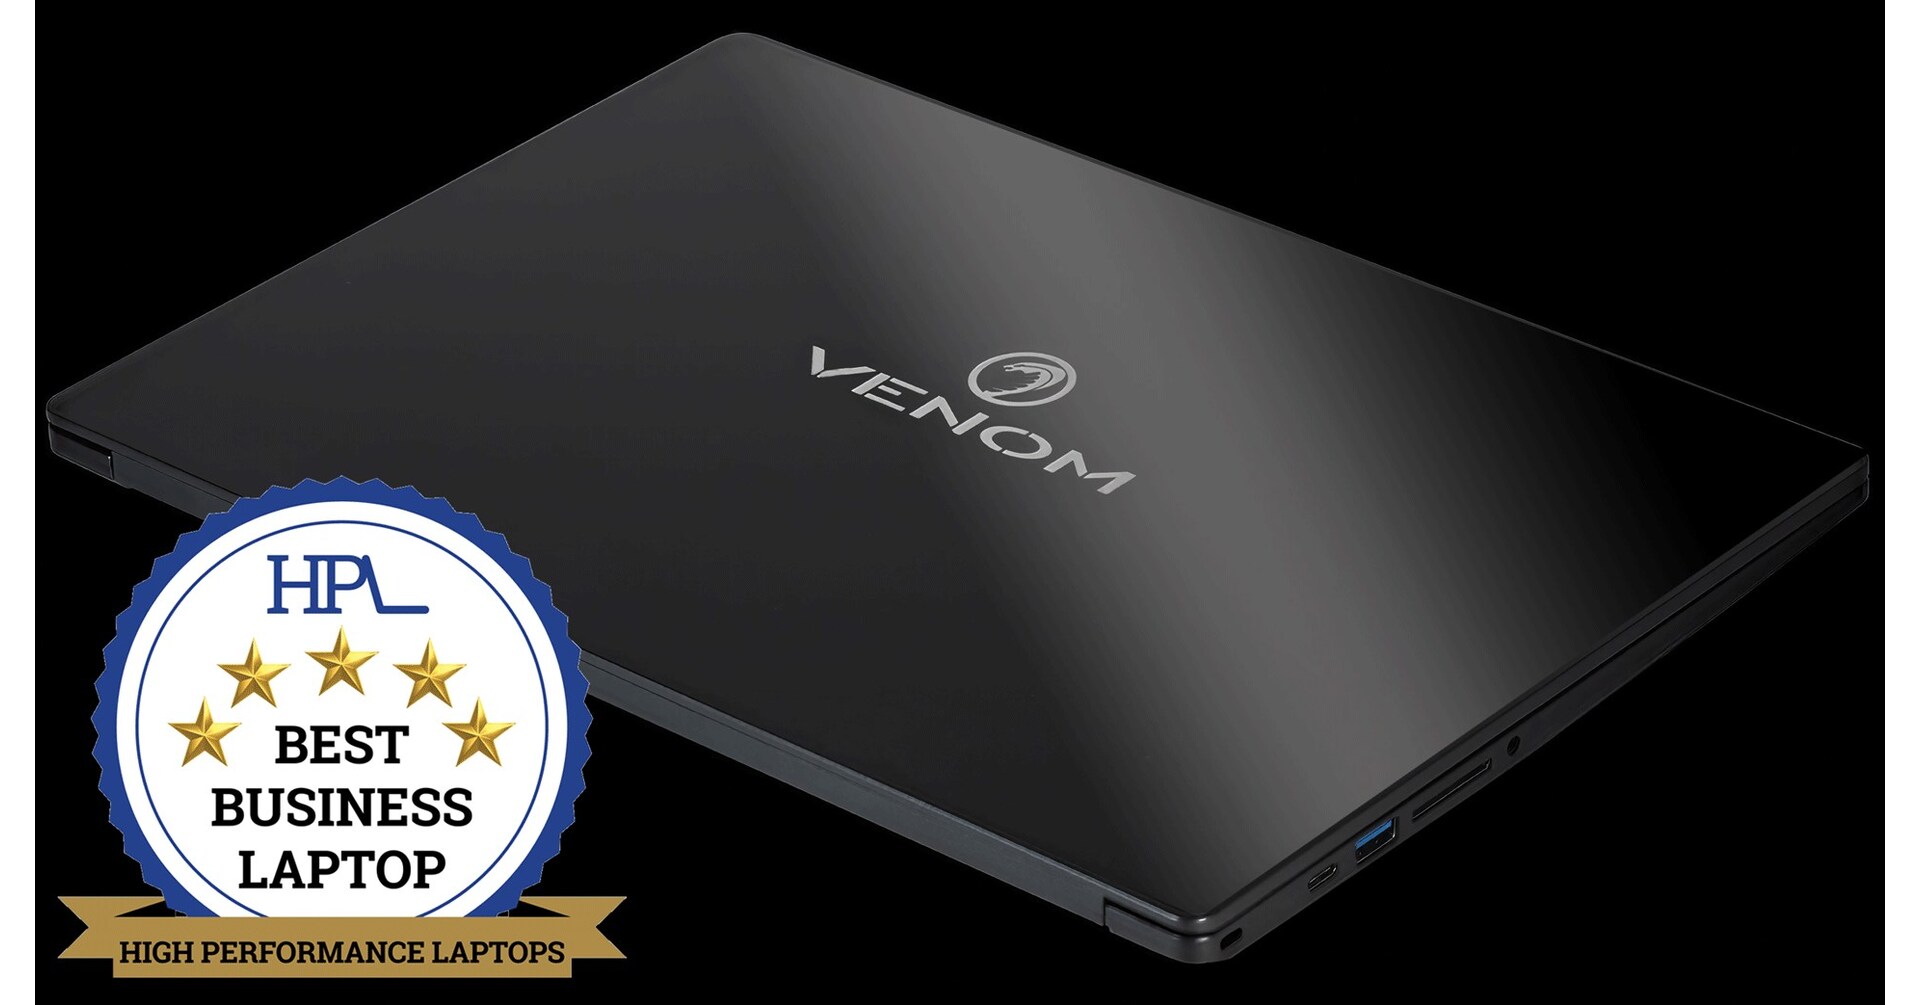 Venom BlackBook Zero 14 honored with best business laptop award